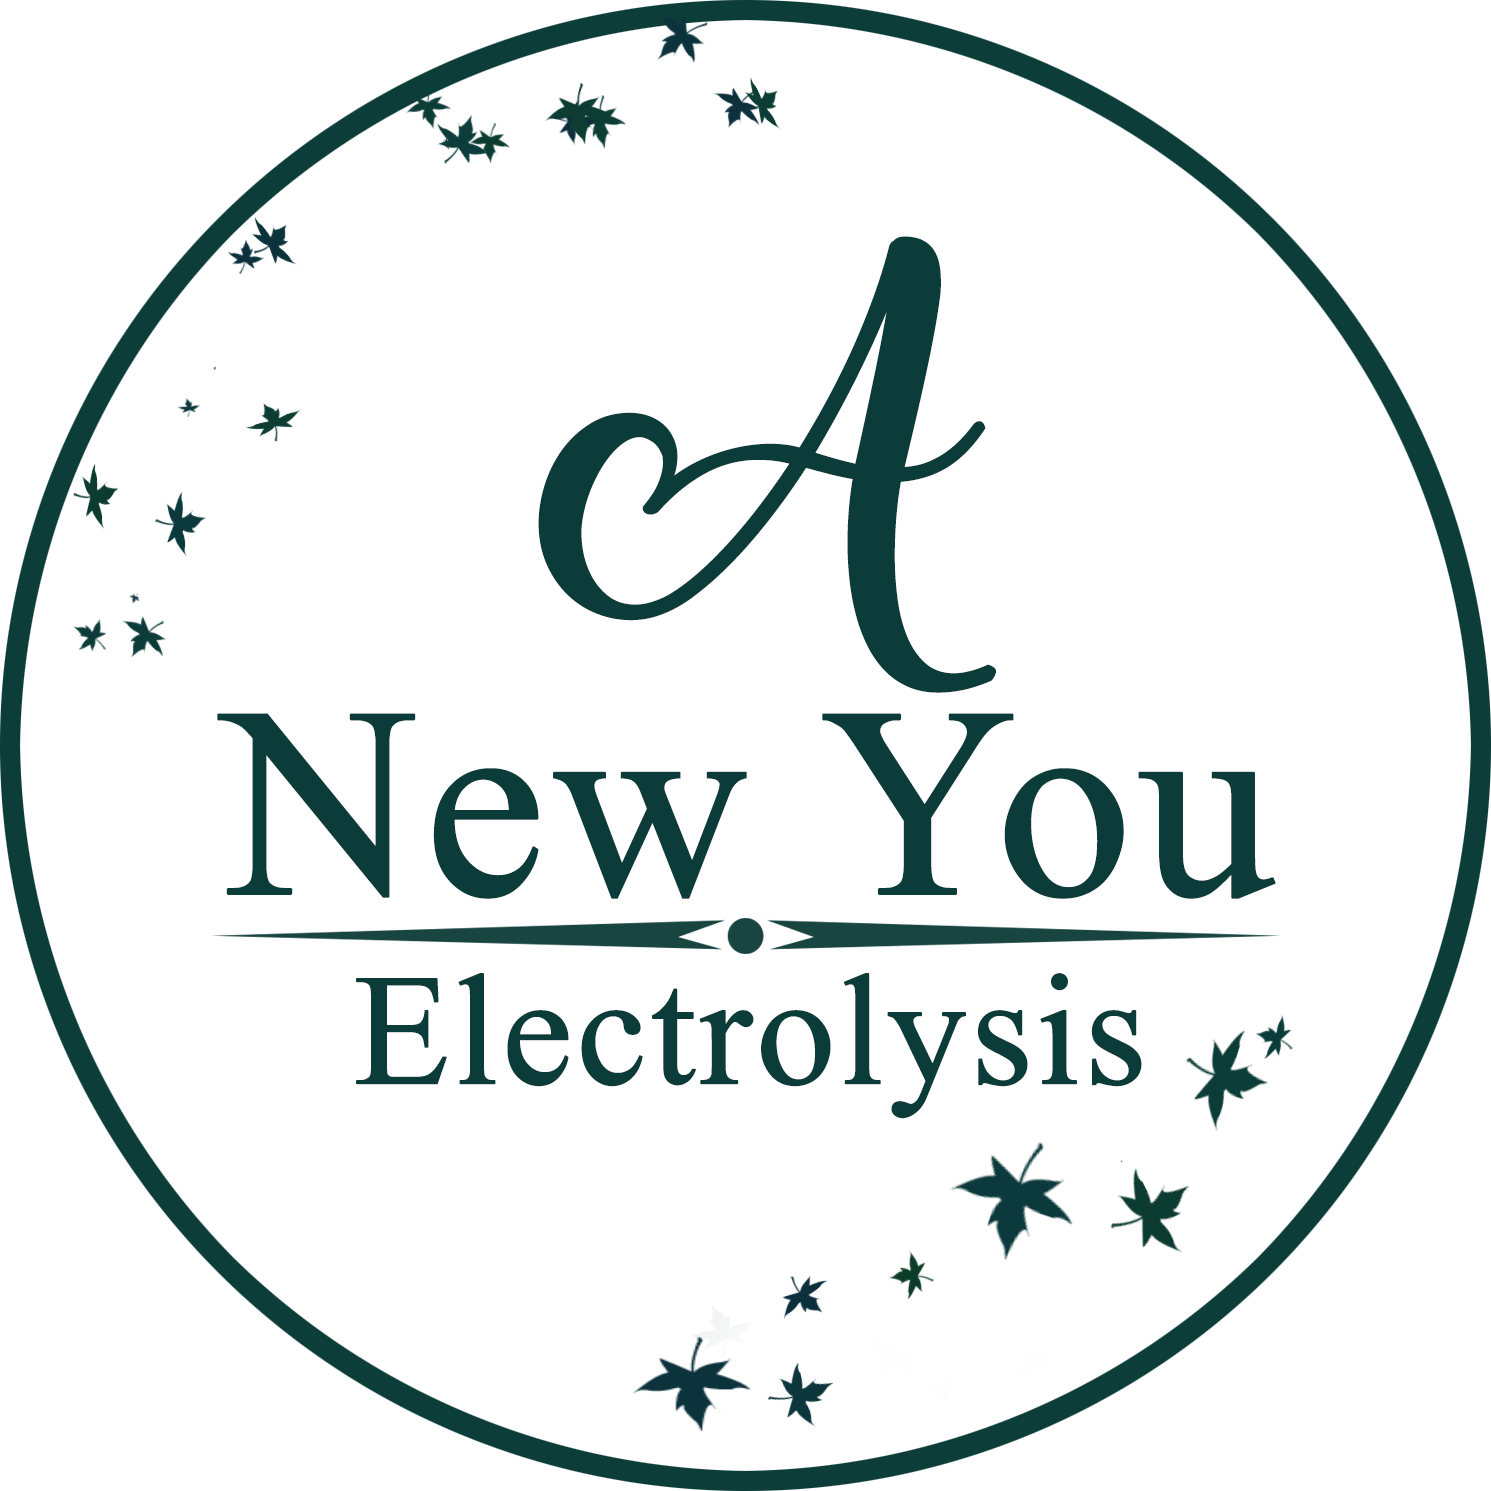 A New You Electrolysis